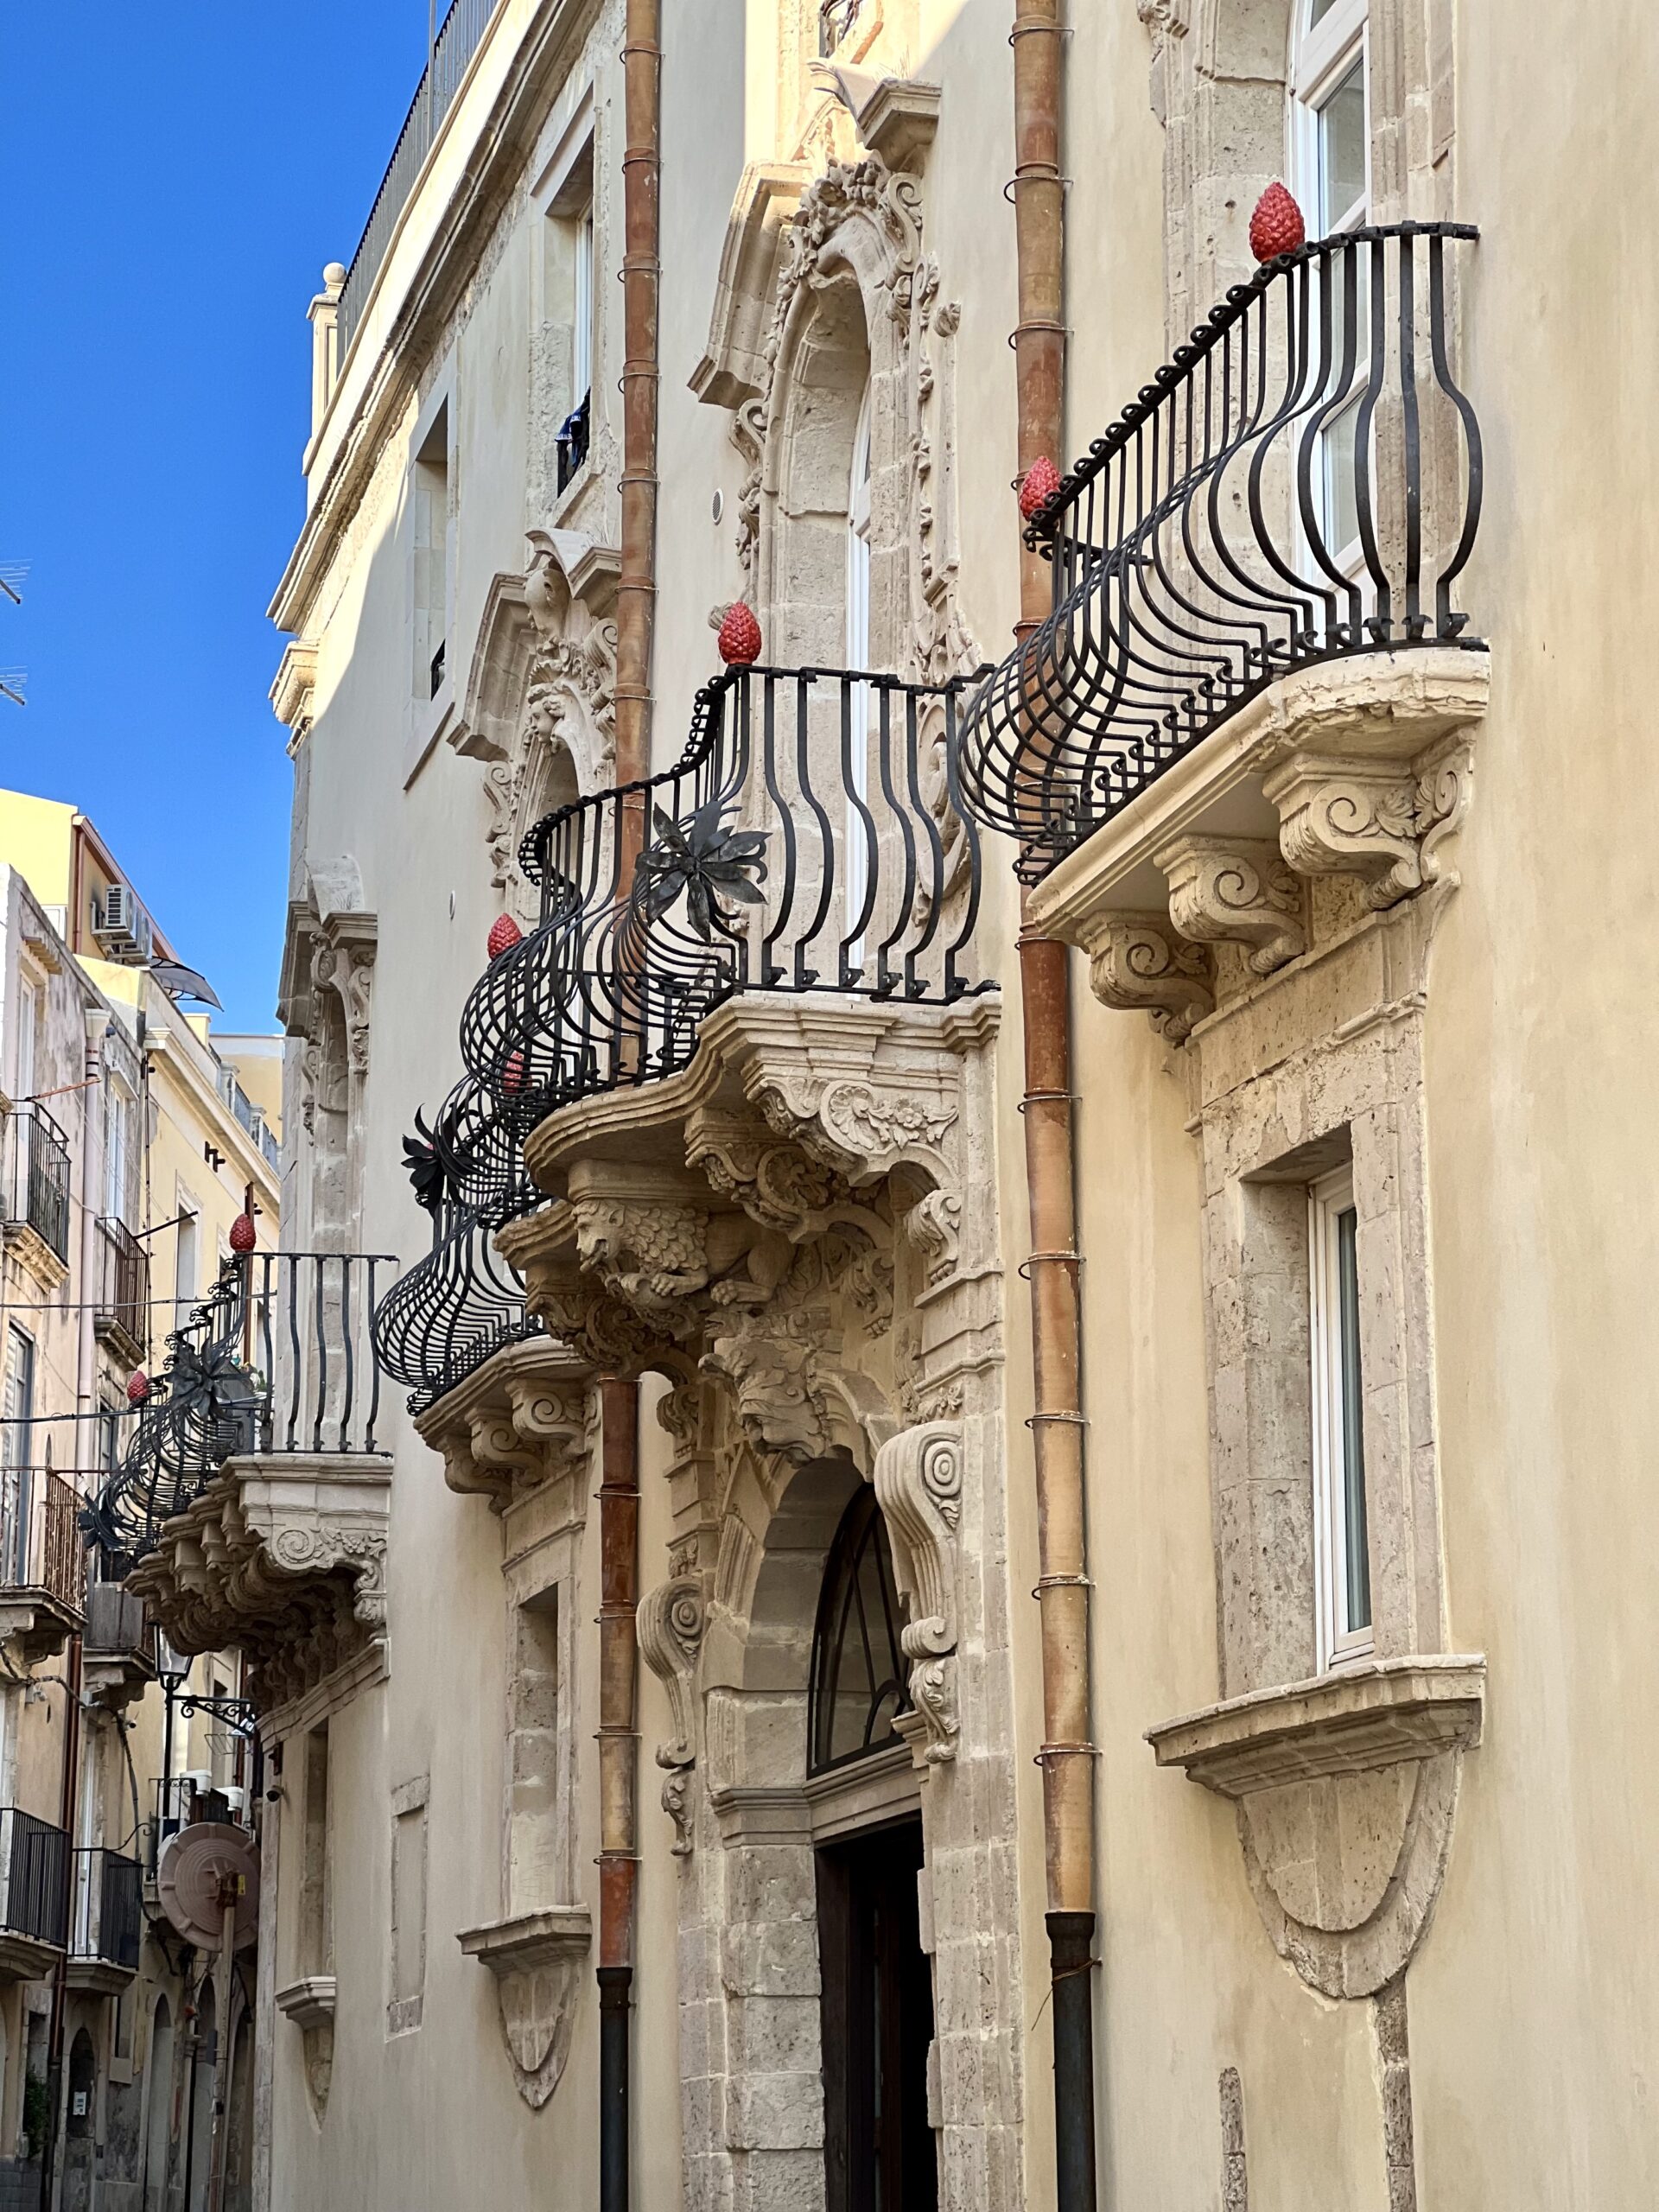 Baroque balconies in Graziella